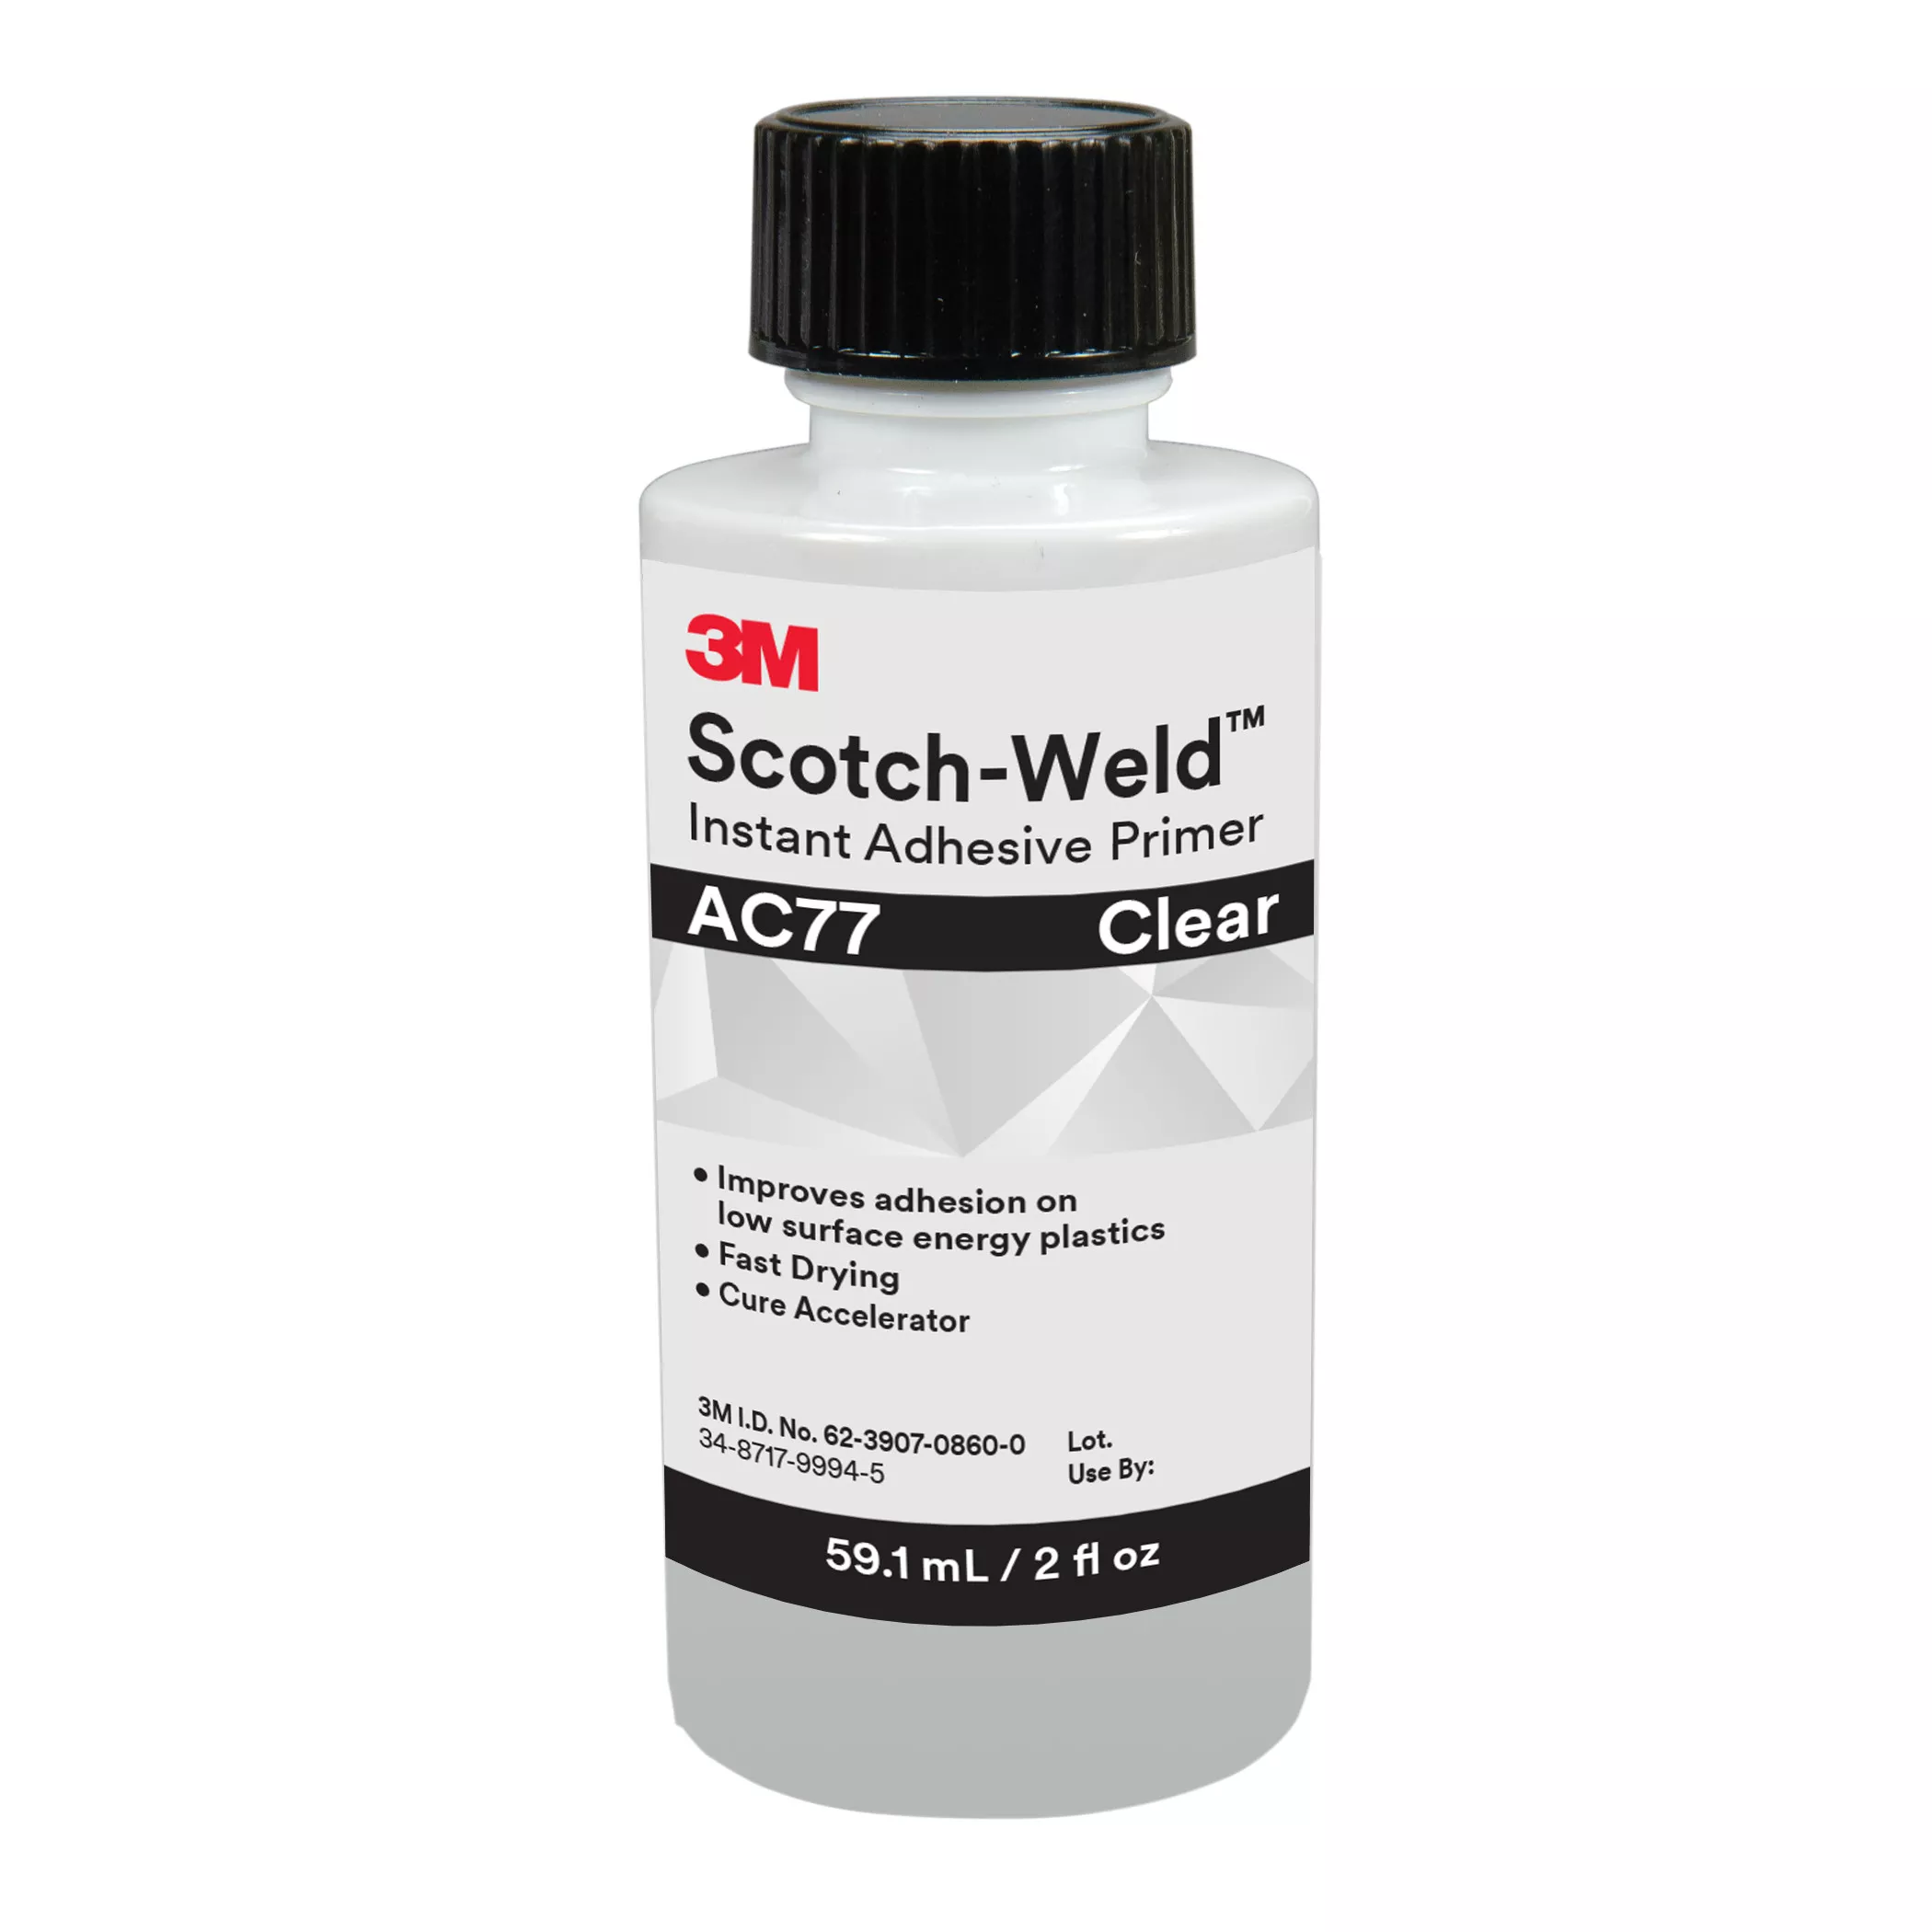 3M™ Scotch-Weld™ Instant Adhesive Primer AC77, Clear, 2 fl oz, 10
Bottles/Case